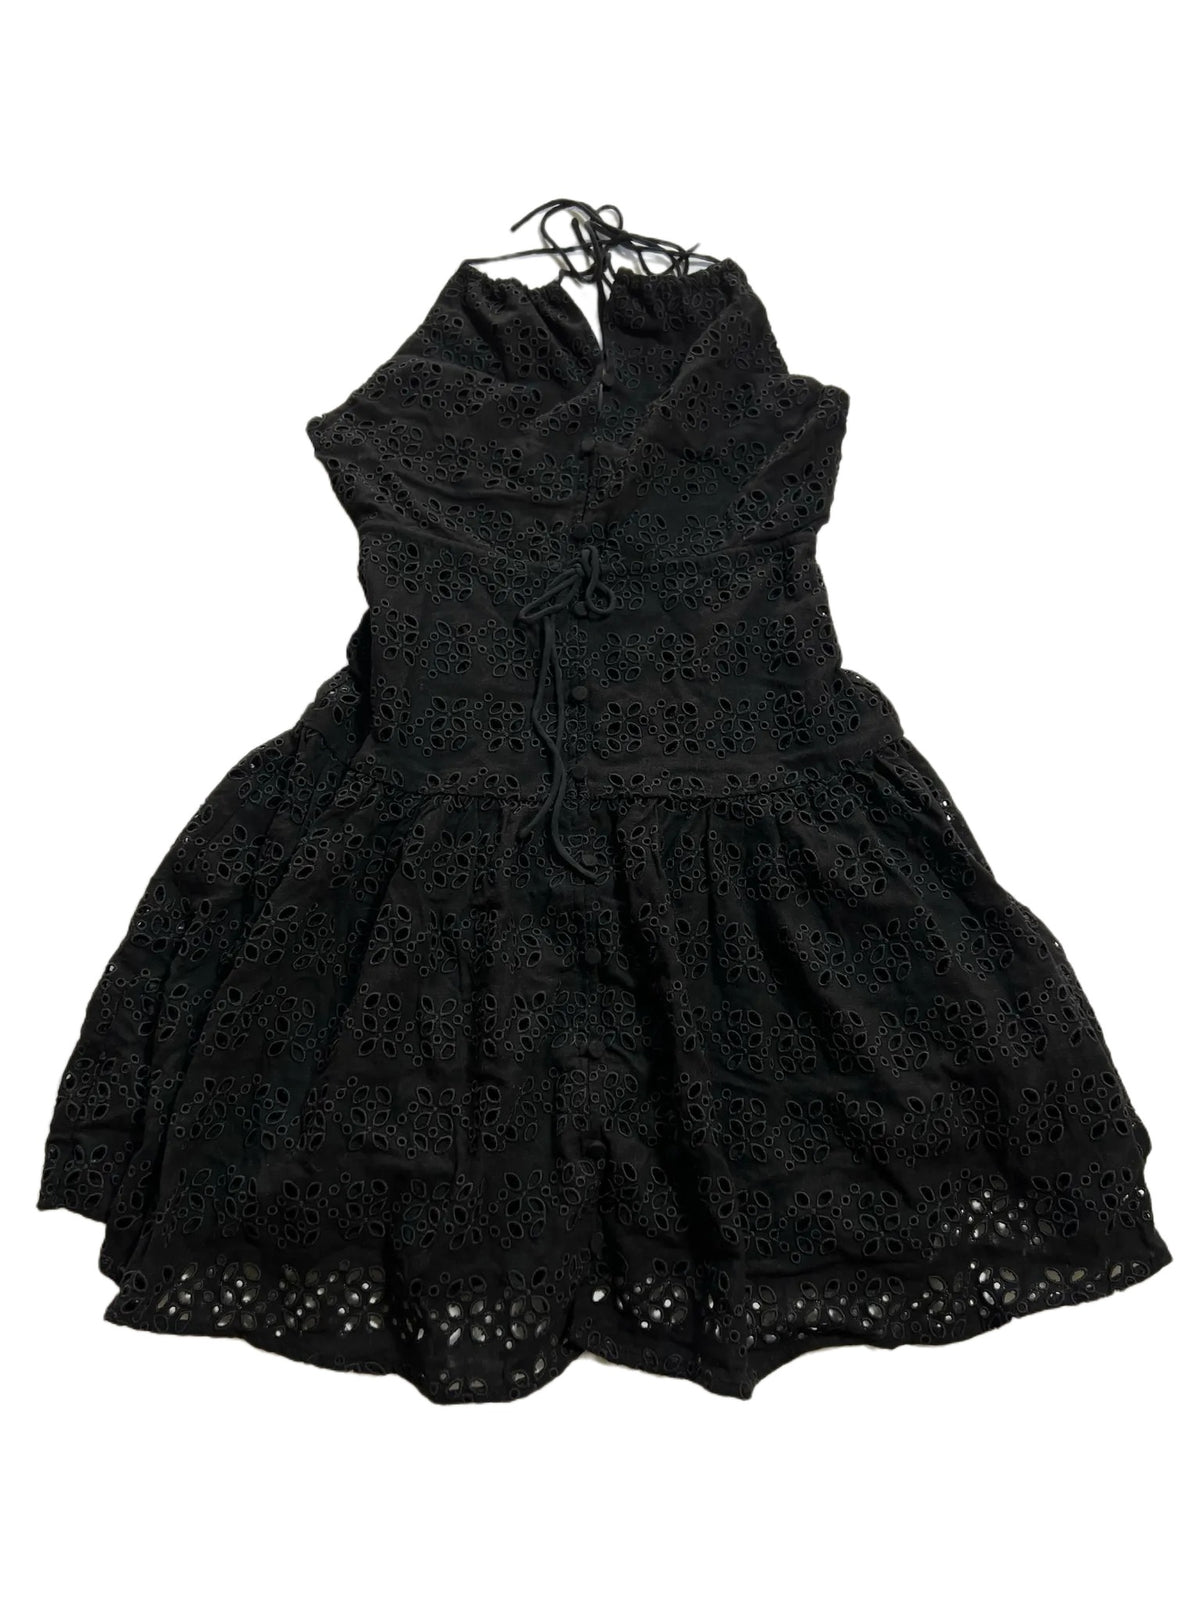 J Crew- Black Lace Halter Mini Dress NEW WITH TAGS!